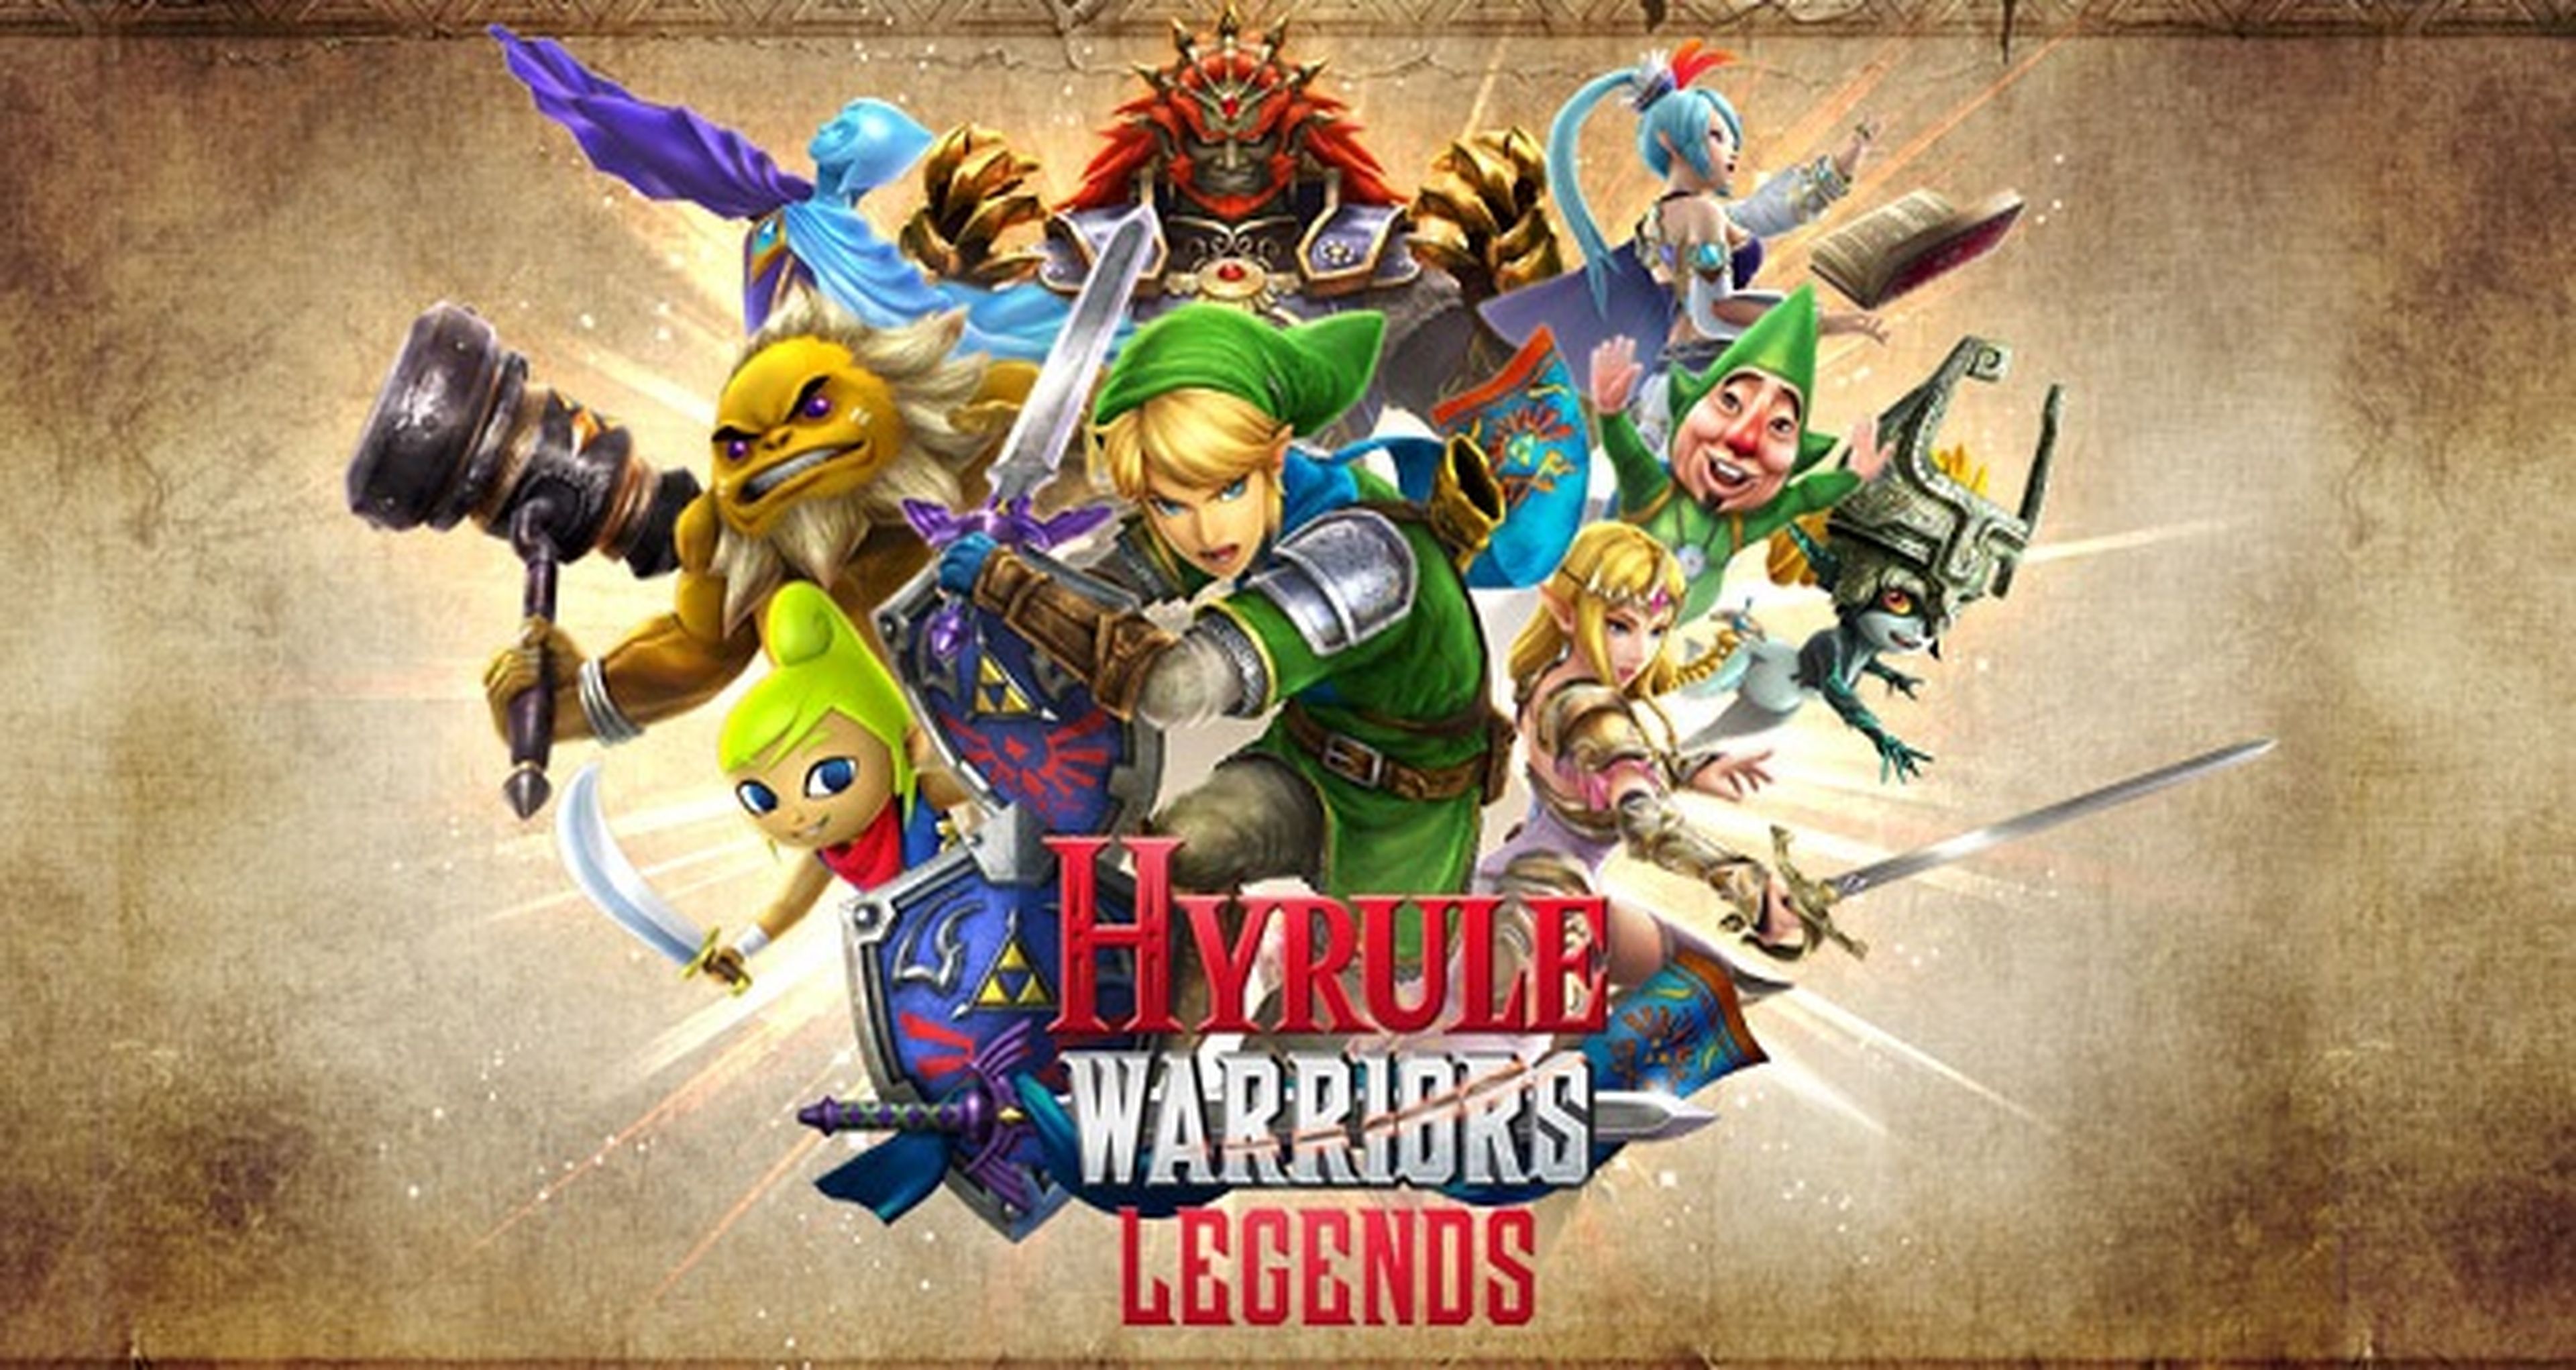 New Nintendo 3DS XL Edición Especial Hyrule Warrios Legends confirmada